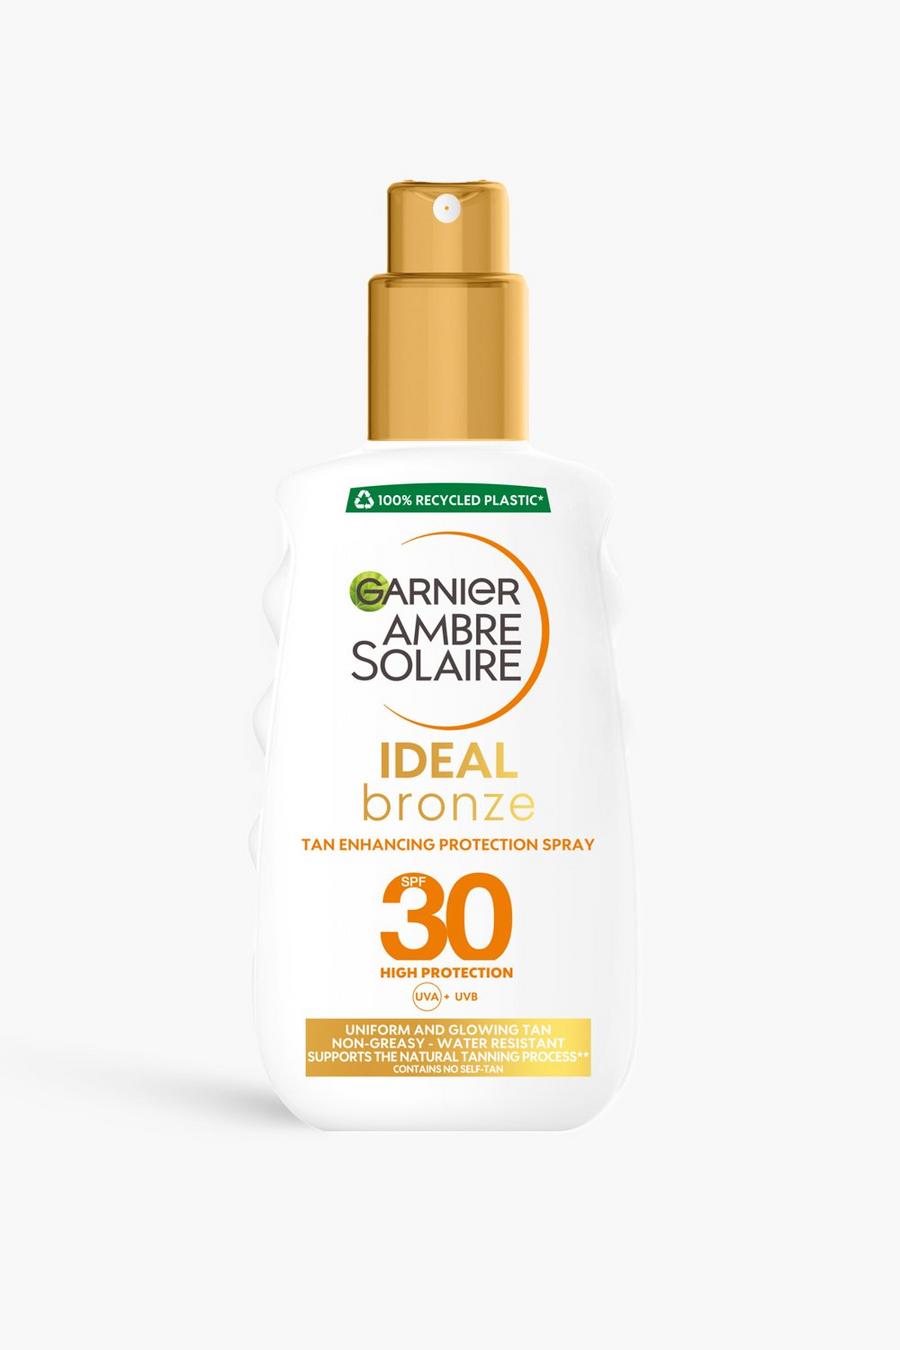 Garnier - Ambre solaire spray Ideal Bronze SPF 30 - 200ml, White image number 1